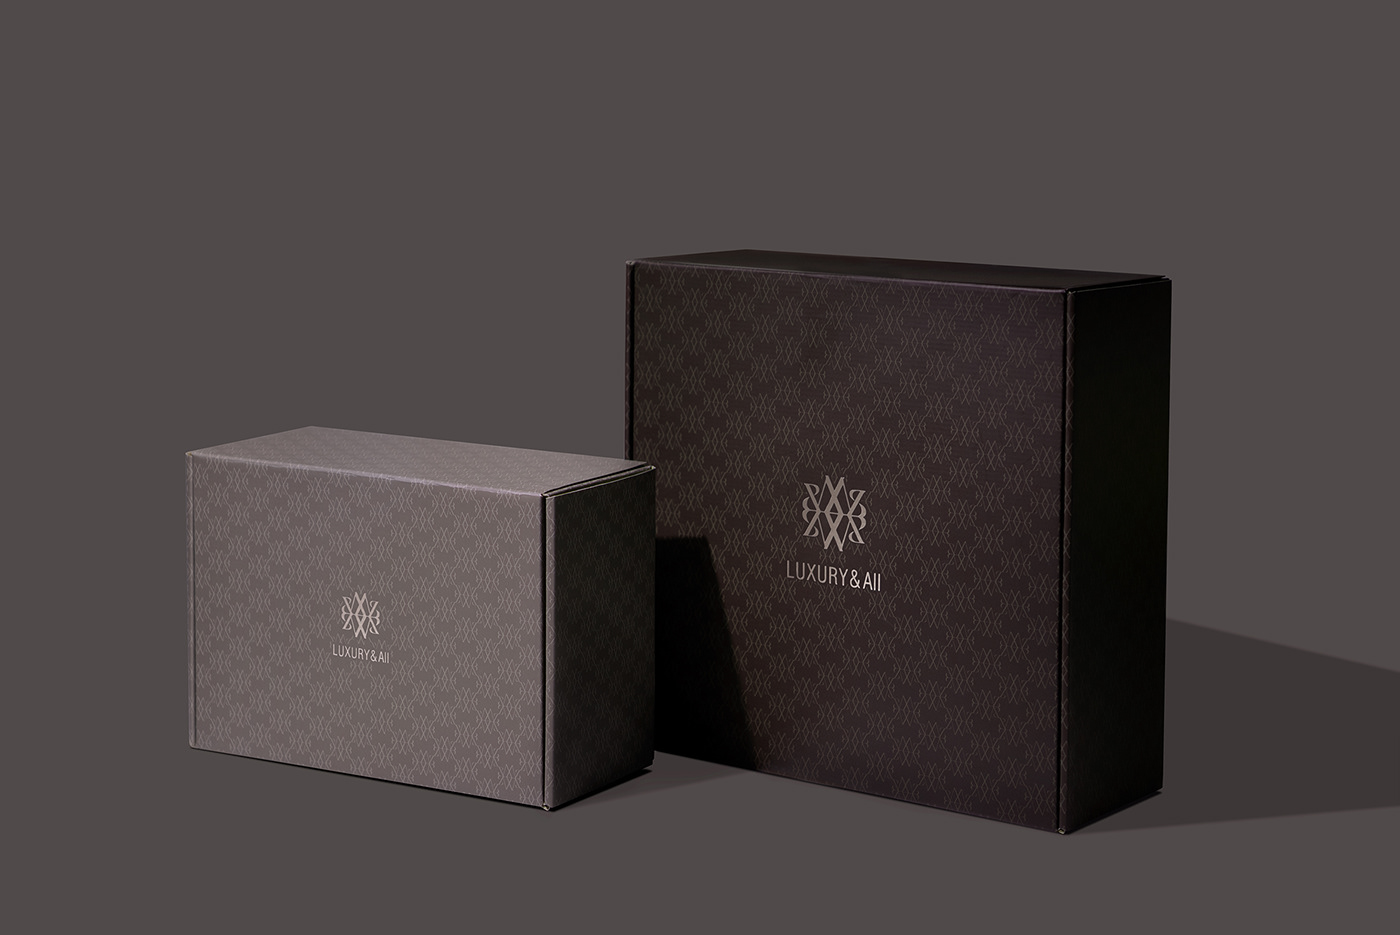 Hidesign hotfoil luxurypackagedesign packagedesign Packaging patterndesign patternpackagedesign redesign